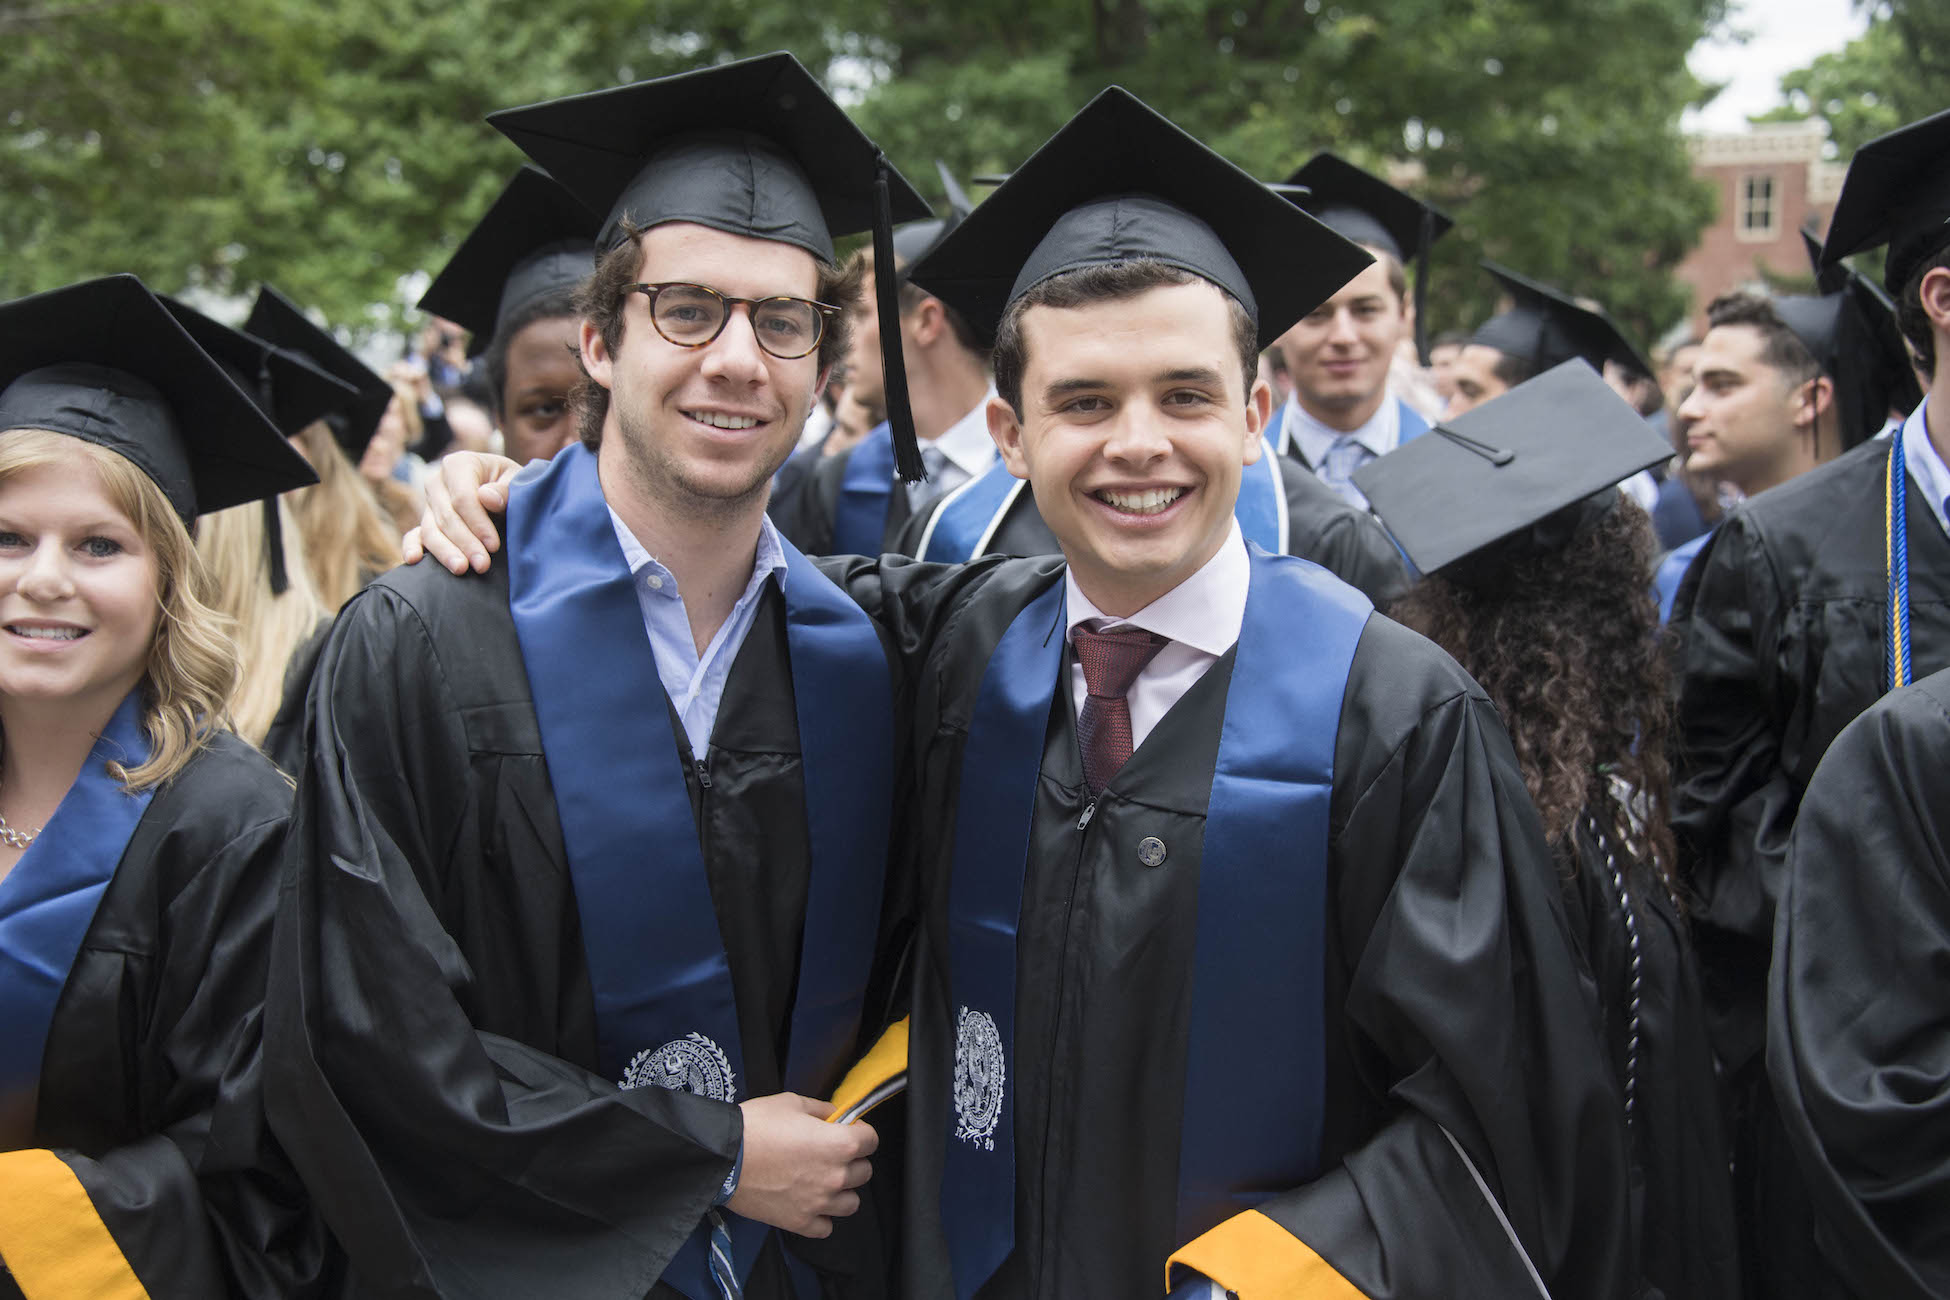 Two MSB graduates smiling